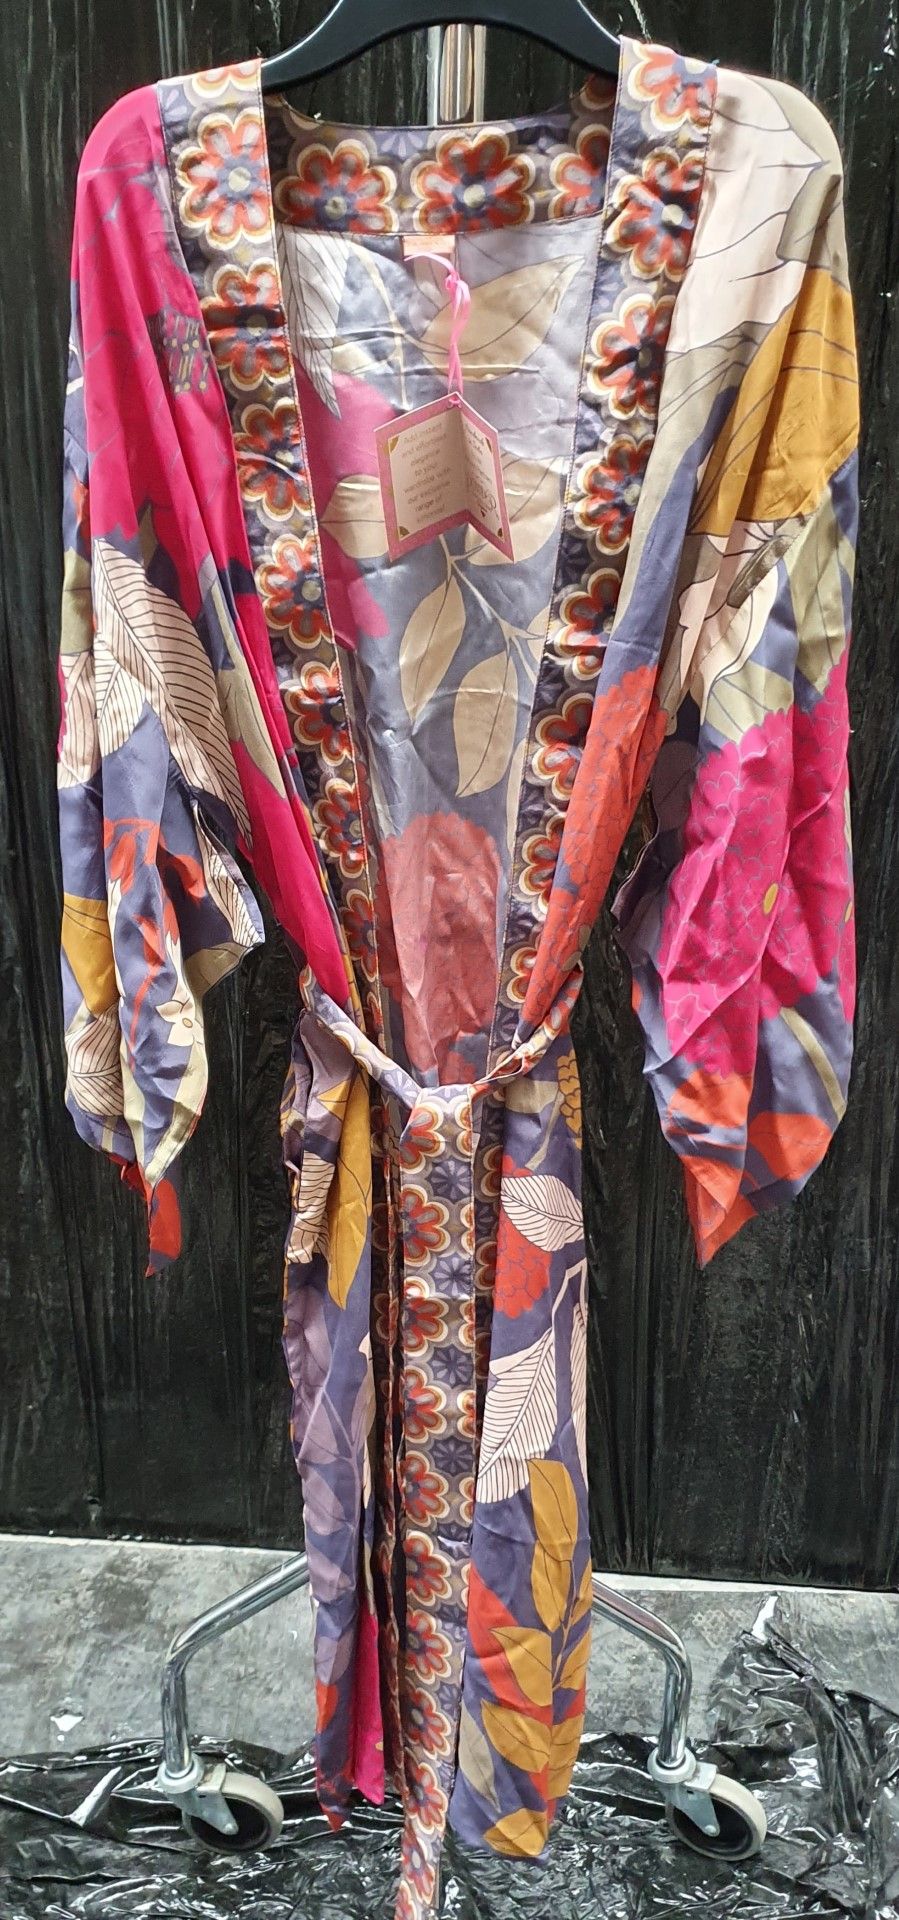 4 x Powder Kimono Style Gowns- Folk Art Petal Finish 100% Viscose Fabric - Adult One Size - New - Image 4 of 11